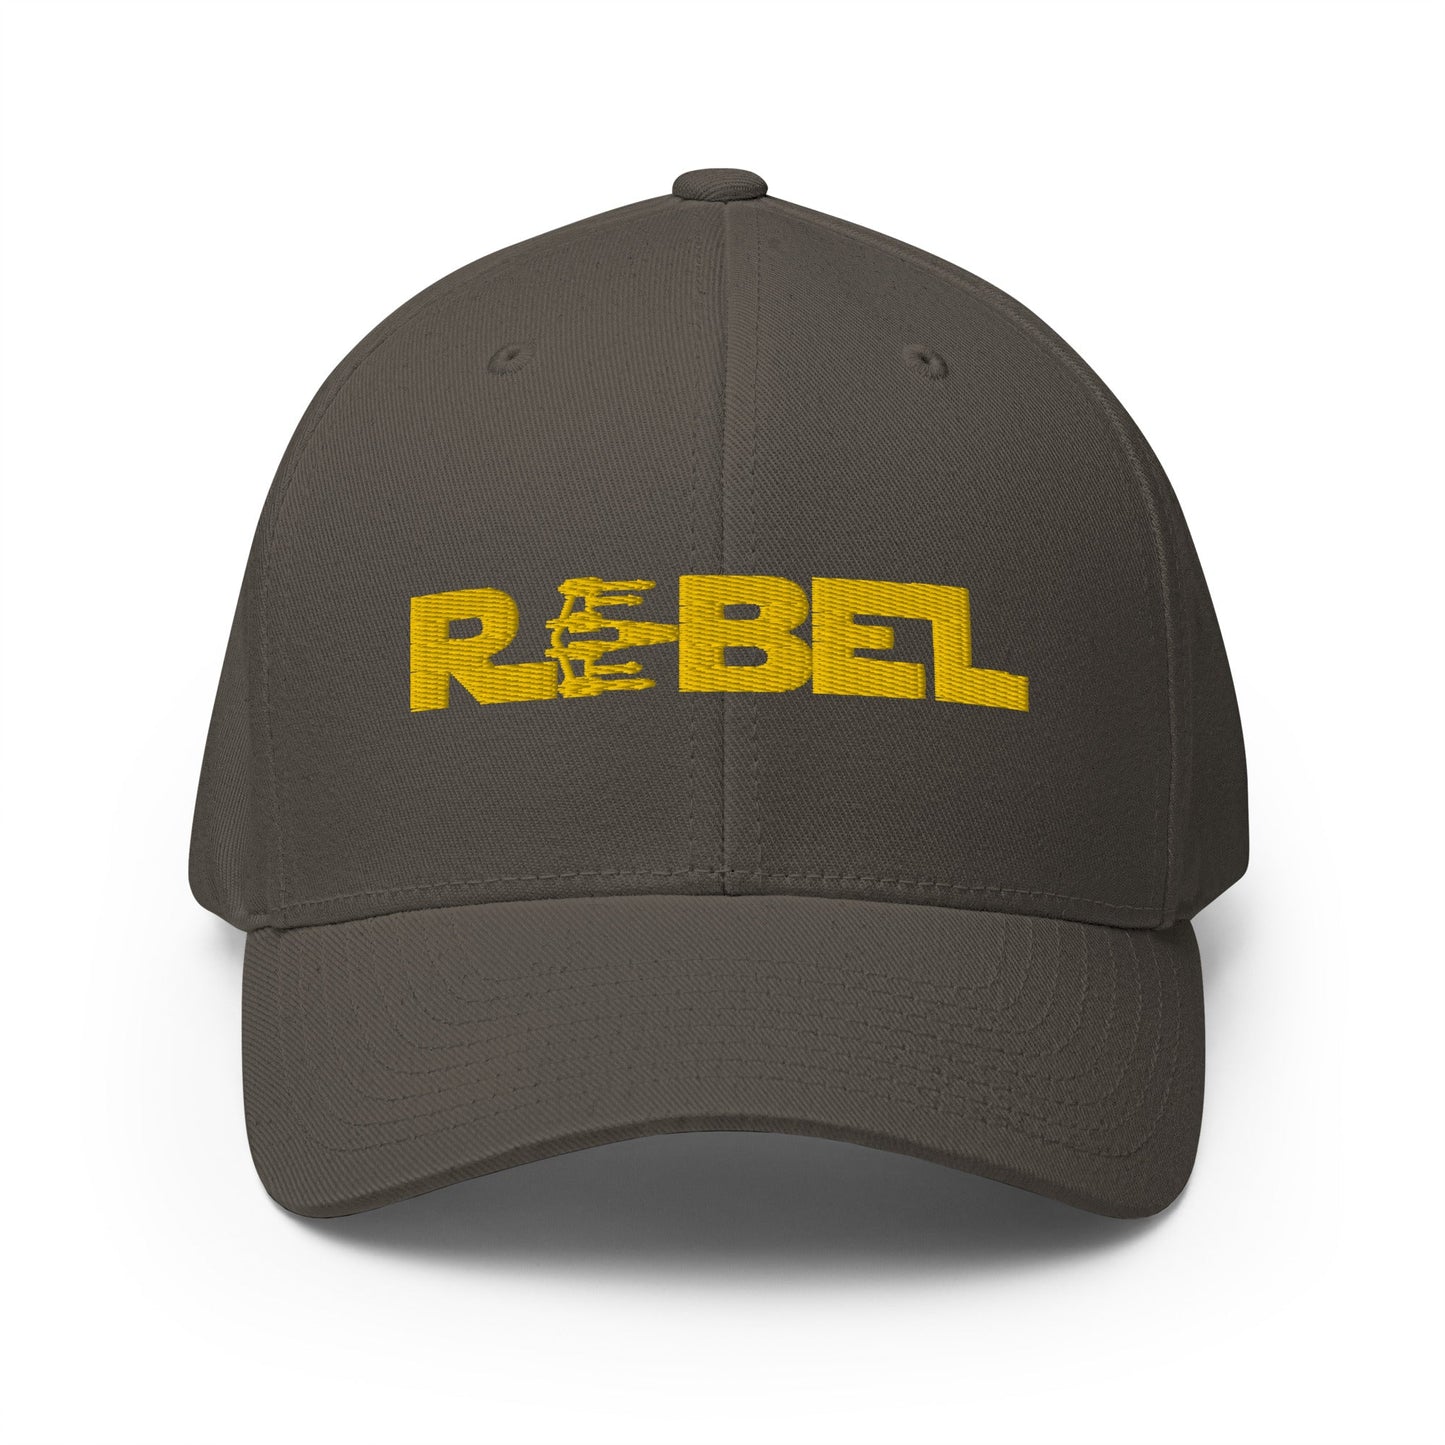 Rebel Structured Twill Cap  Star Wars Parody Baseball Cap – 12